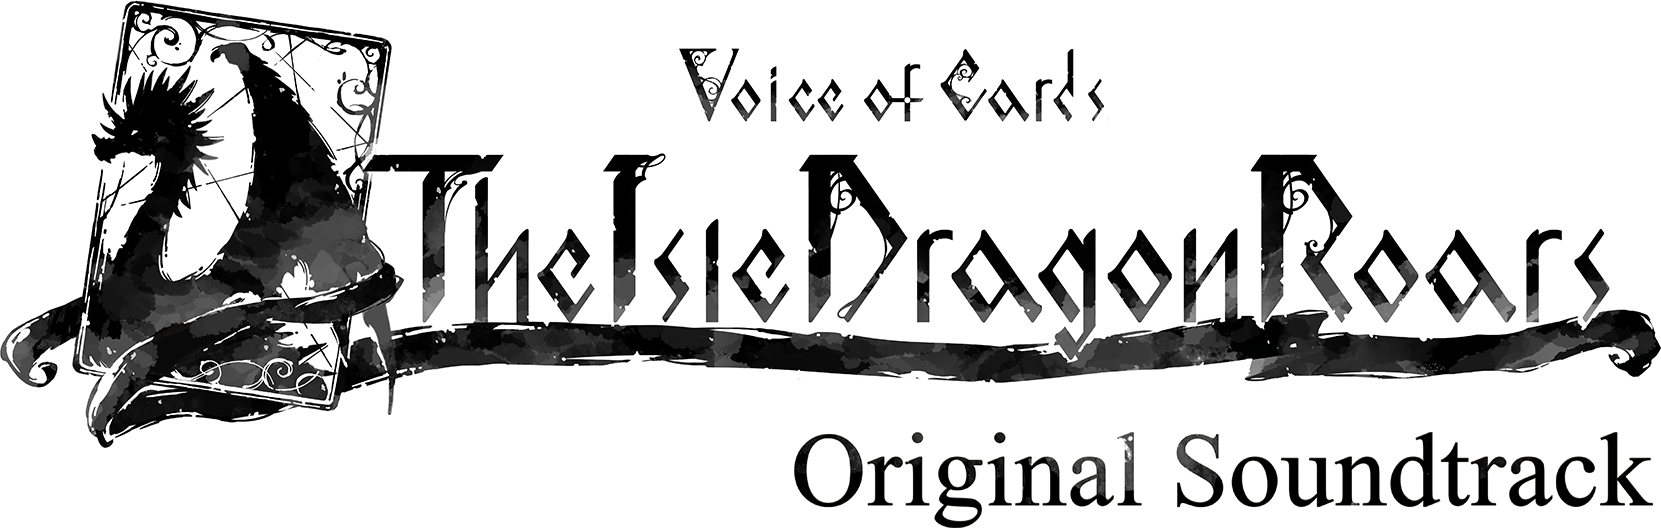 Voice of Cards: The Isle Dragon Roars Original Soundtrack